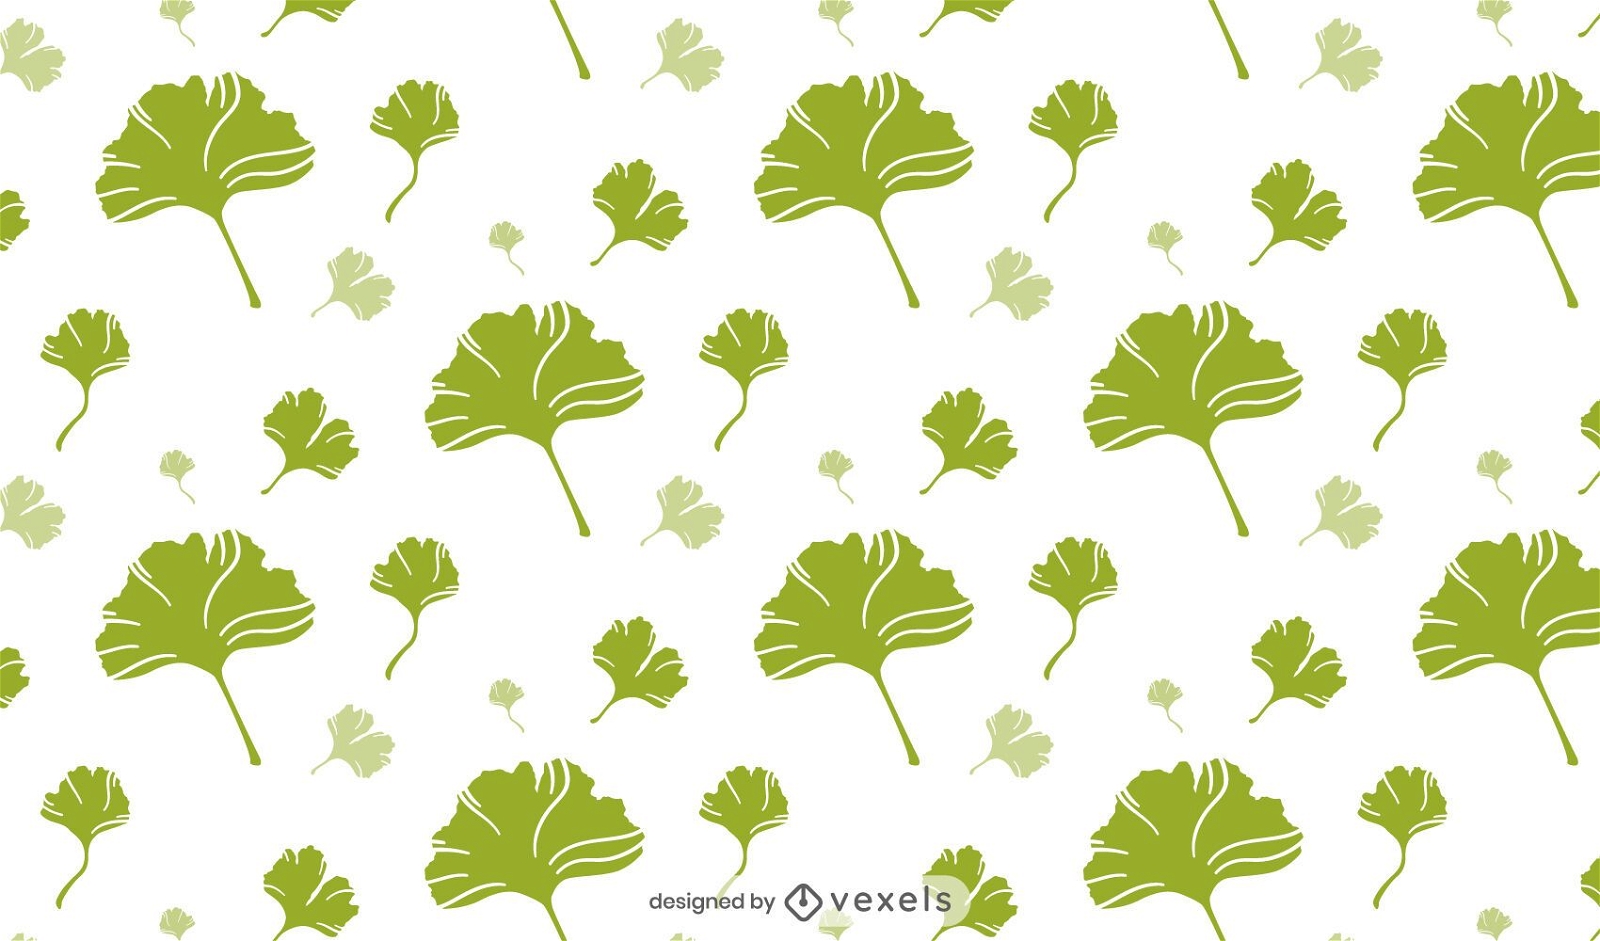 Ginkgo leaves pattern design